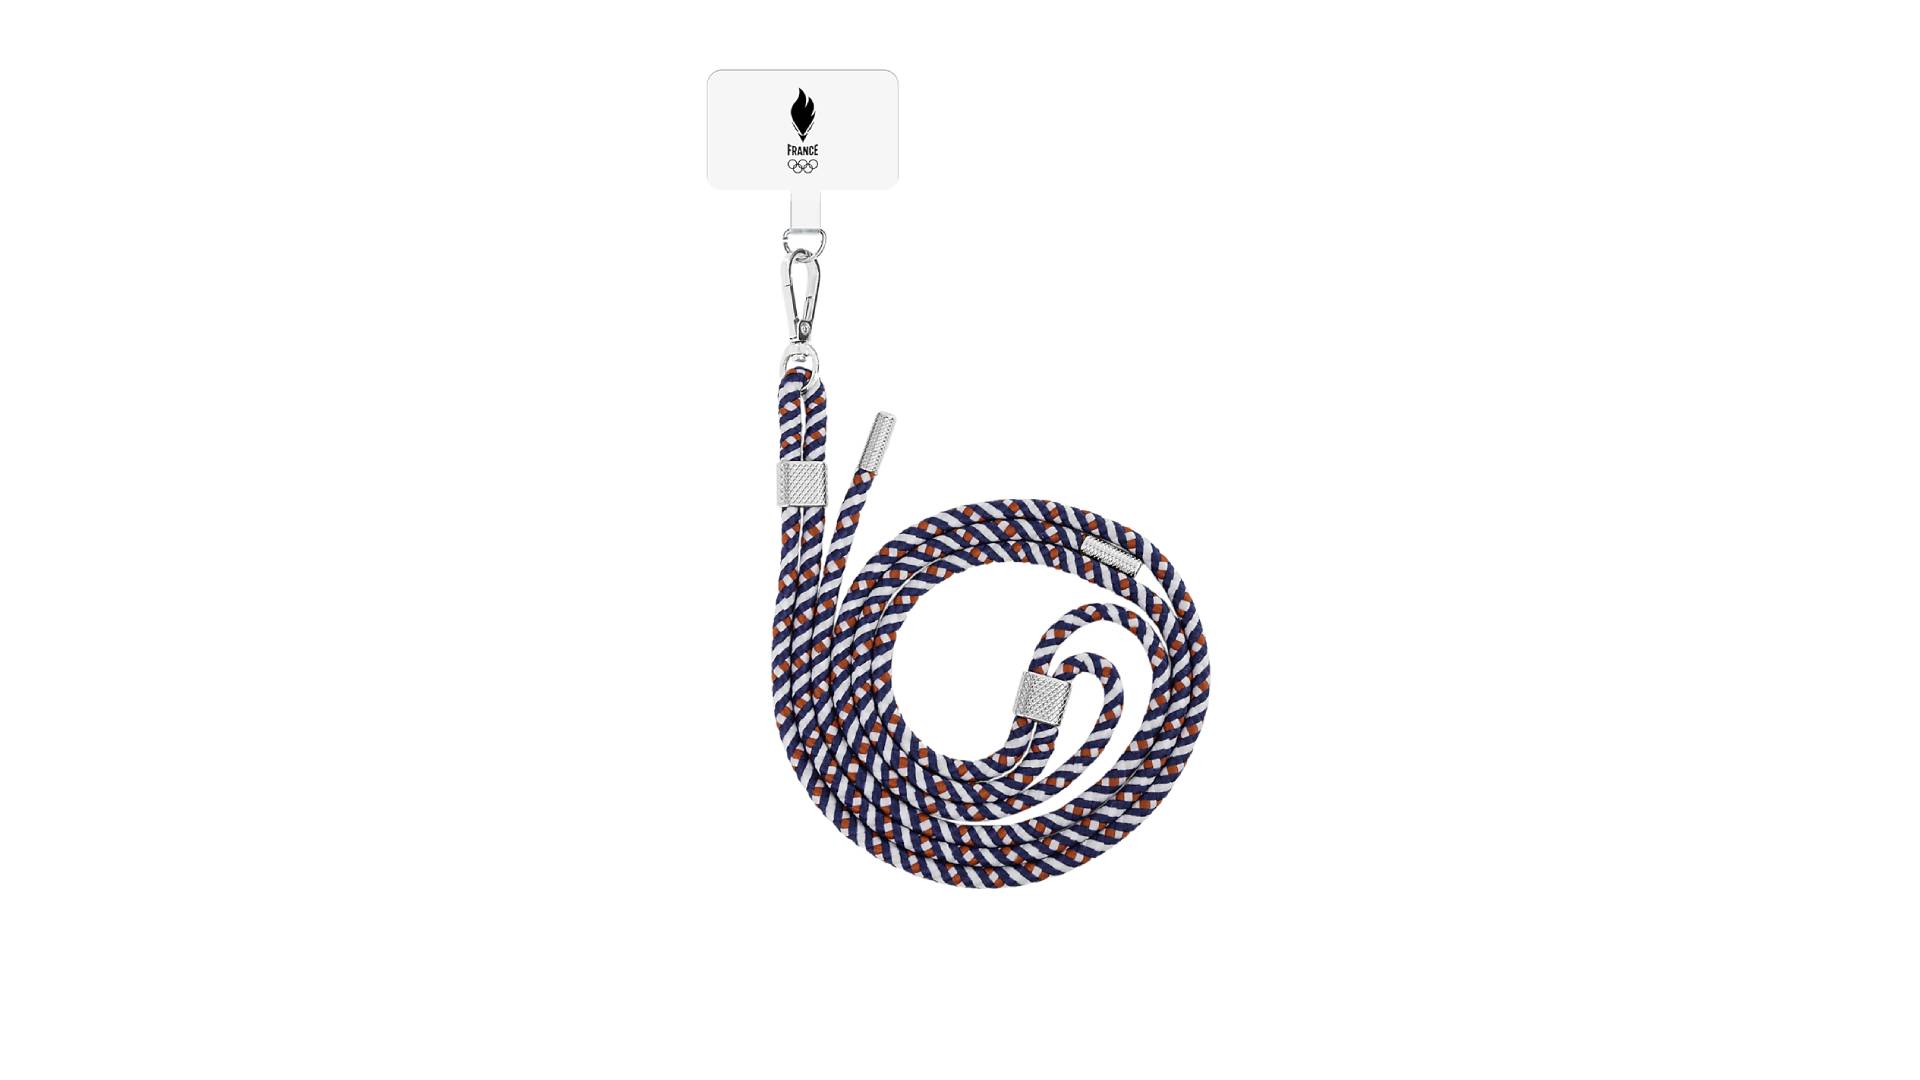 Samsung Paris 2024 Olympic themed braided shoulder strap